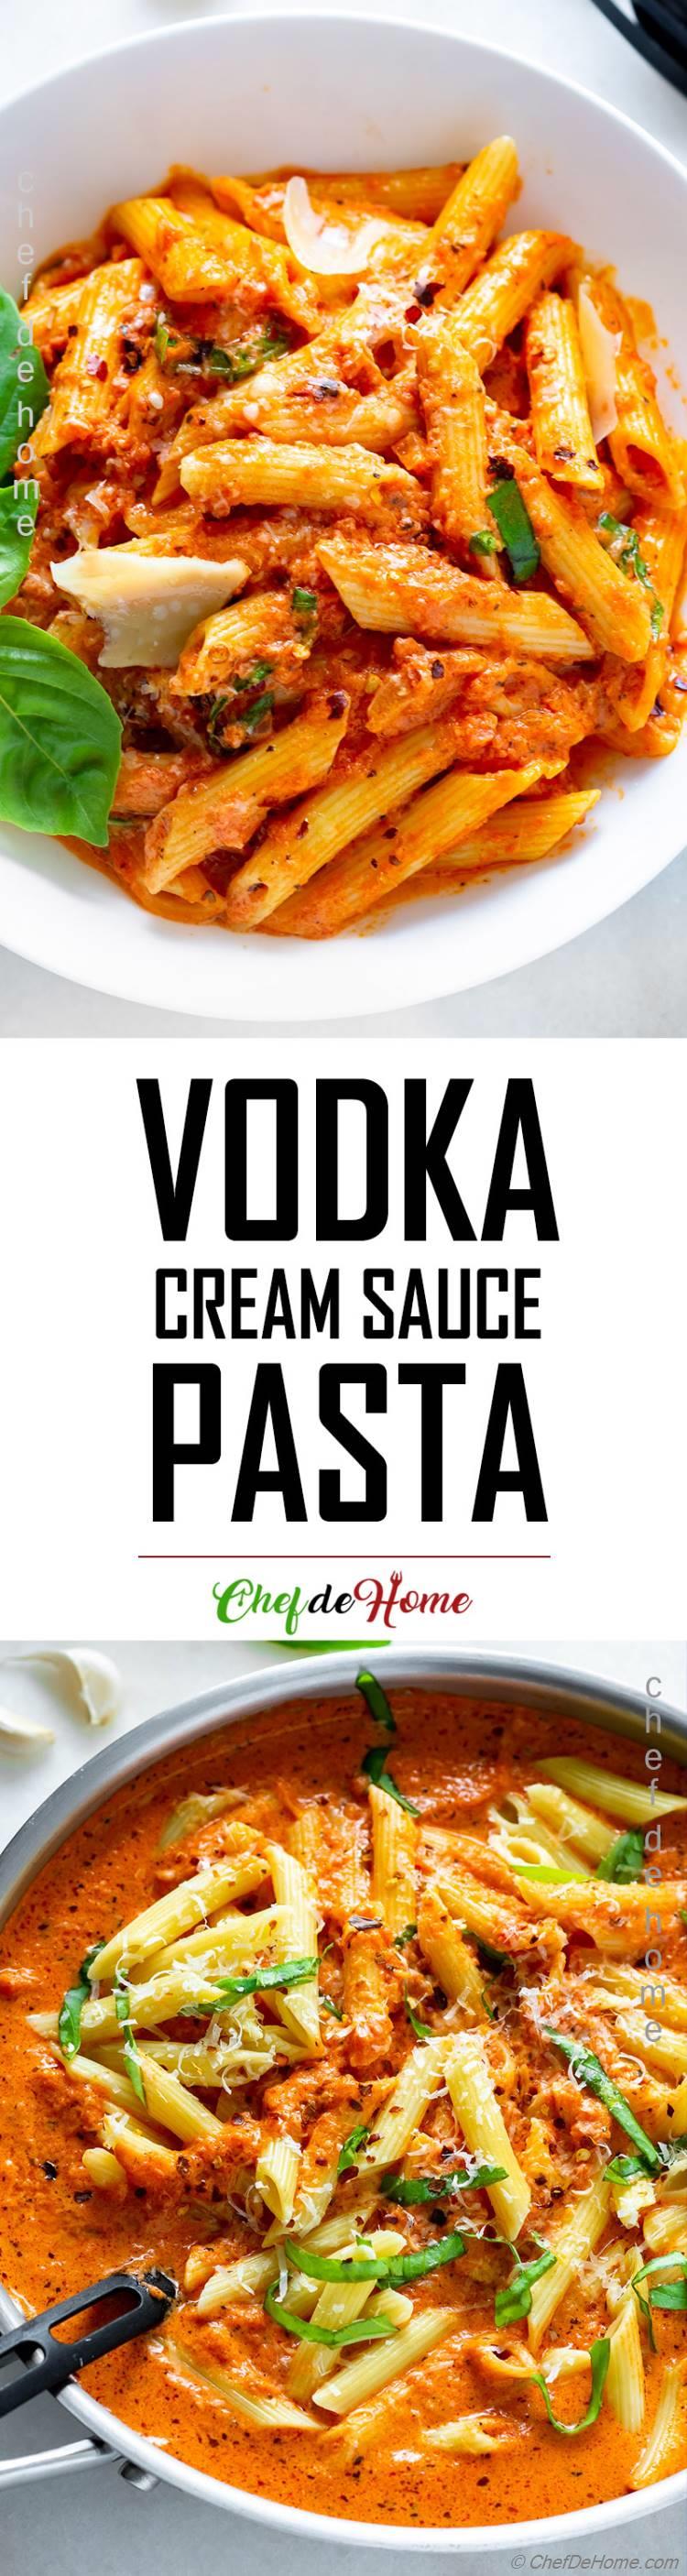 Vodka Pasta Recipe